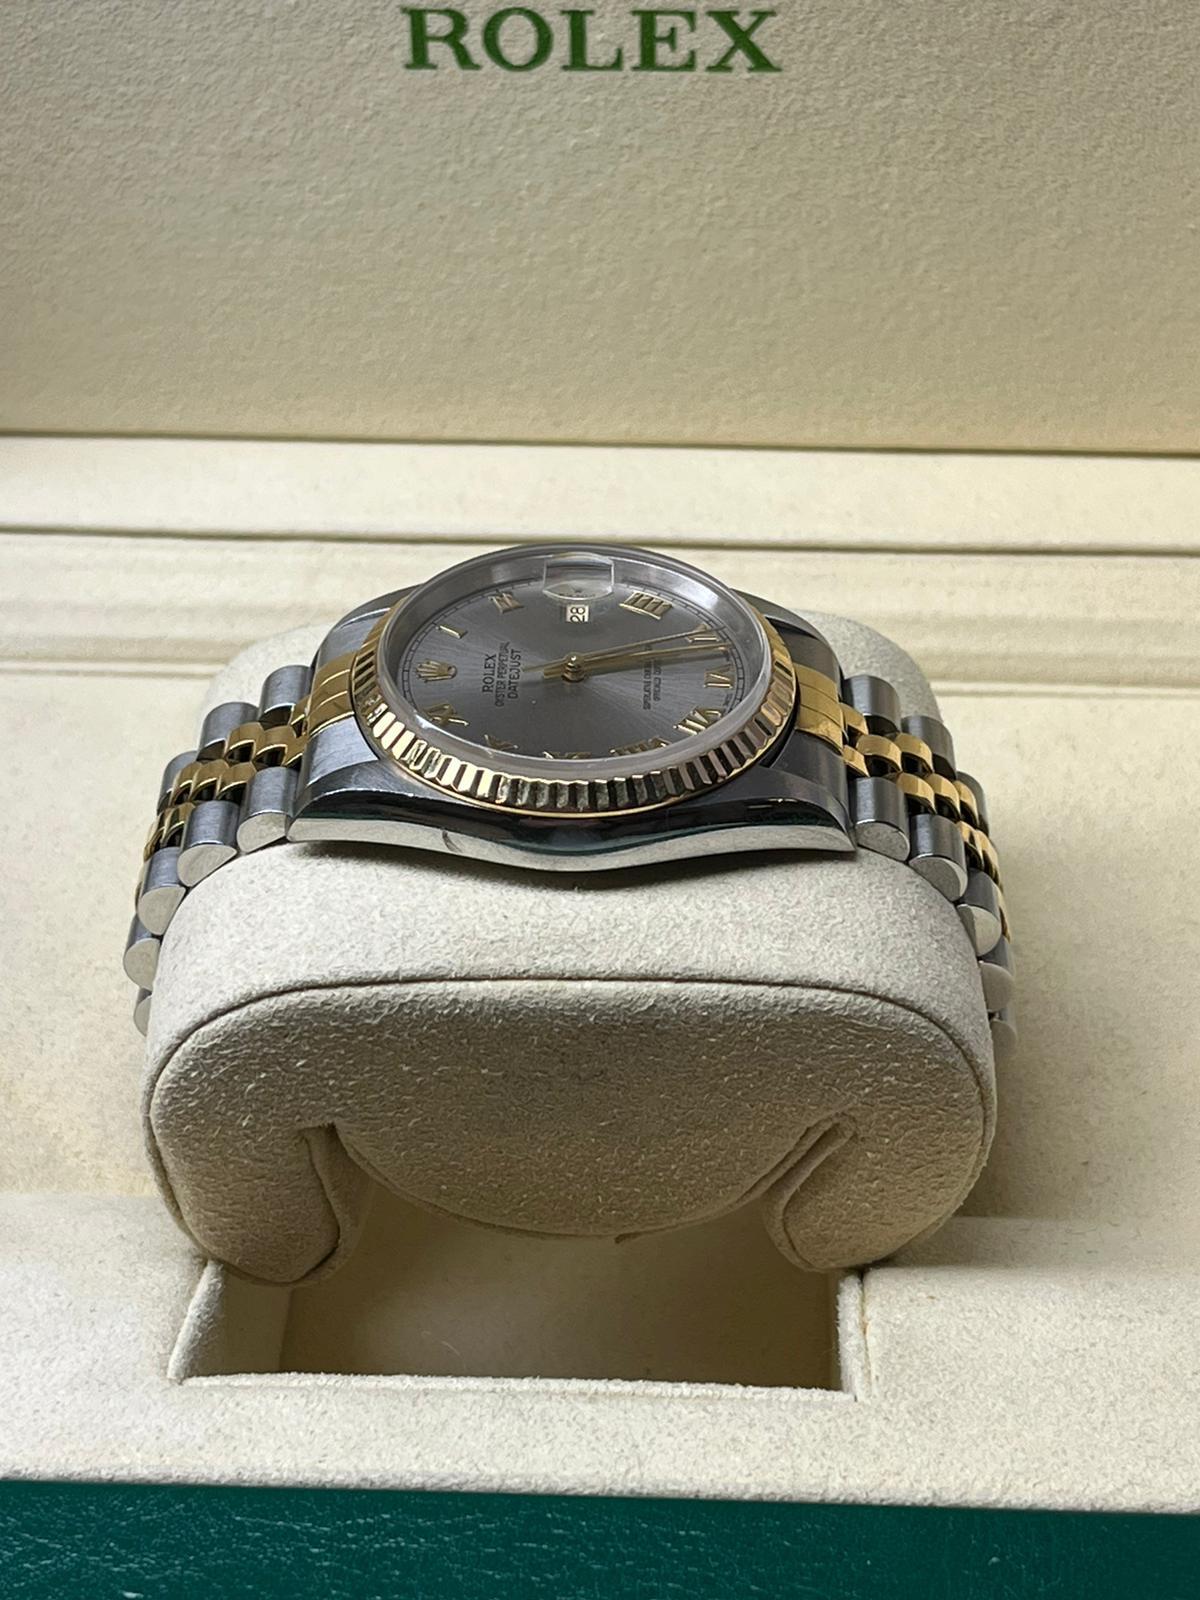 Rolex Datejust Stainless Steel Silver Roman Dial Fluted Bezel Watch 16233 2